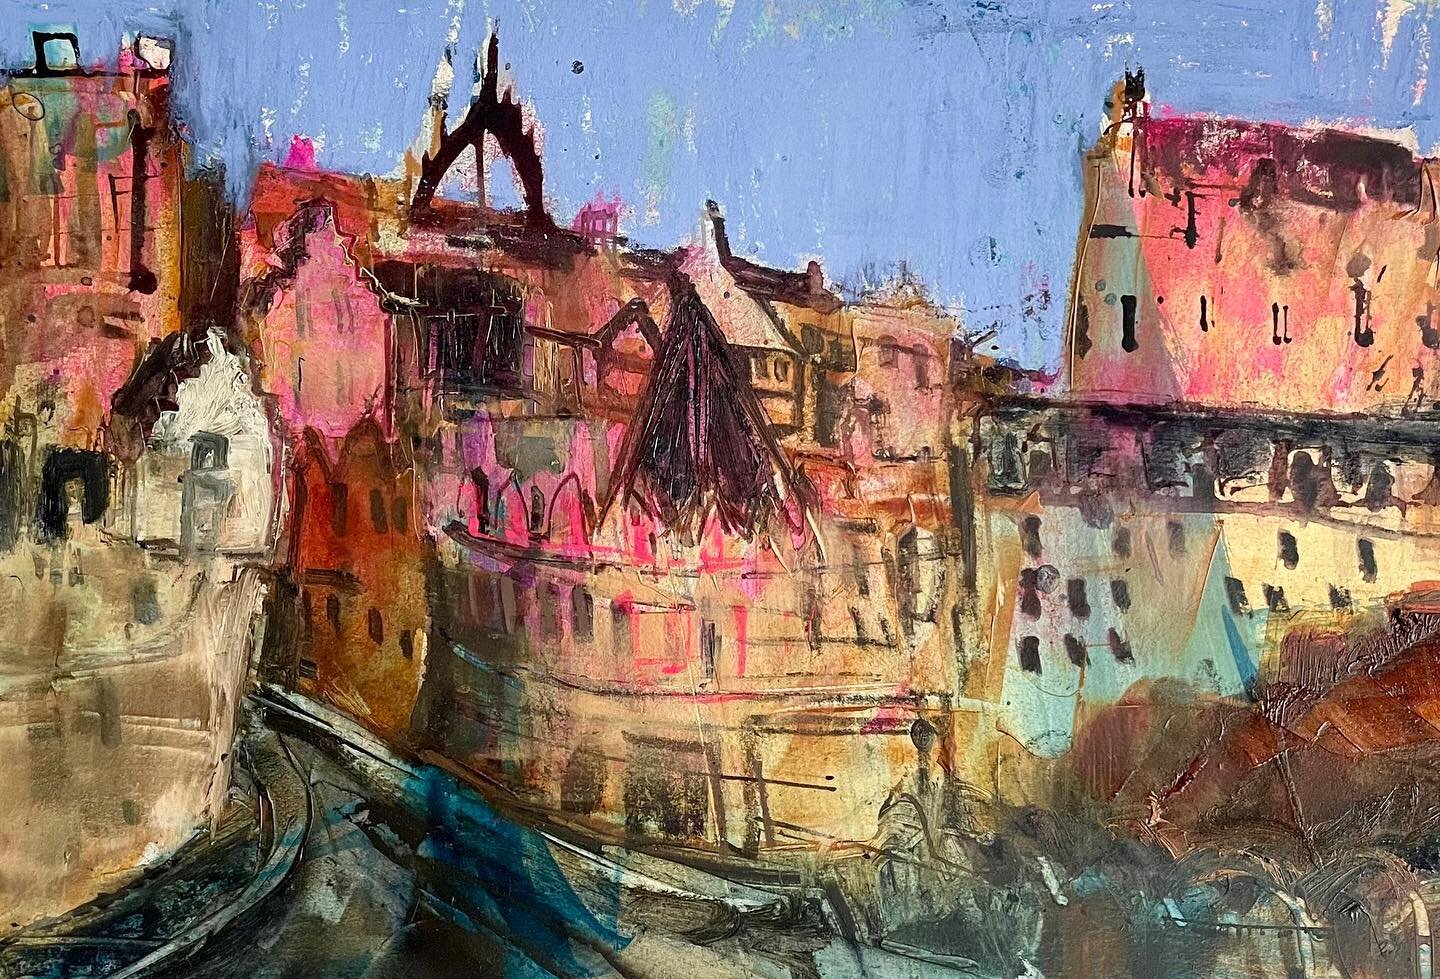 A colourful Edinburgh study to brighten up this gloomy day. 
⠀⠀⠀⠀⠀⠀⠀⠀⠀
⠀⠀⠀⠀⠀⠀⠀⠀⠀
⠀⠀⠀⠀⠀⠀⠀⠀⠀
#edinburghart #edinburgh #scottishartist 
⠀⠀⠀⠀⠀⠀⠀⠀⠀